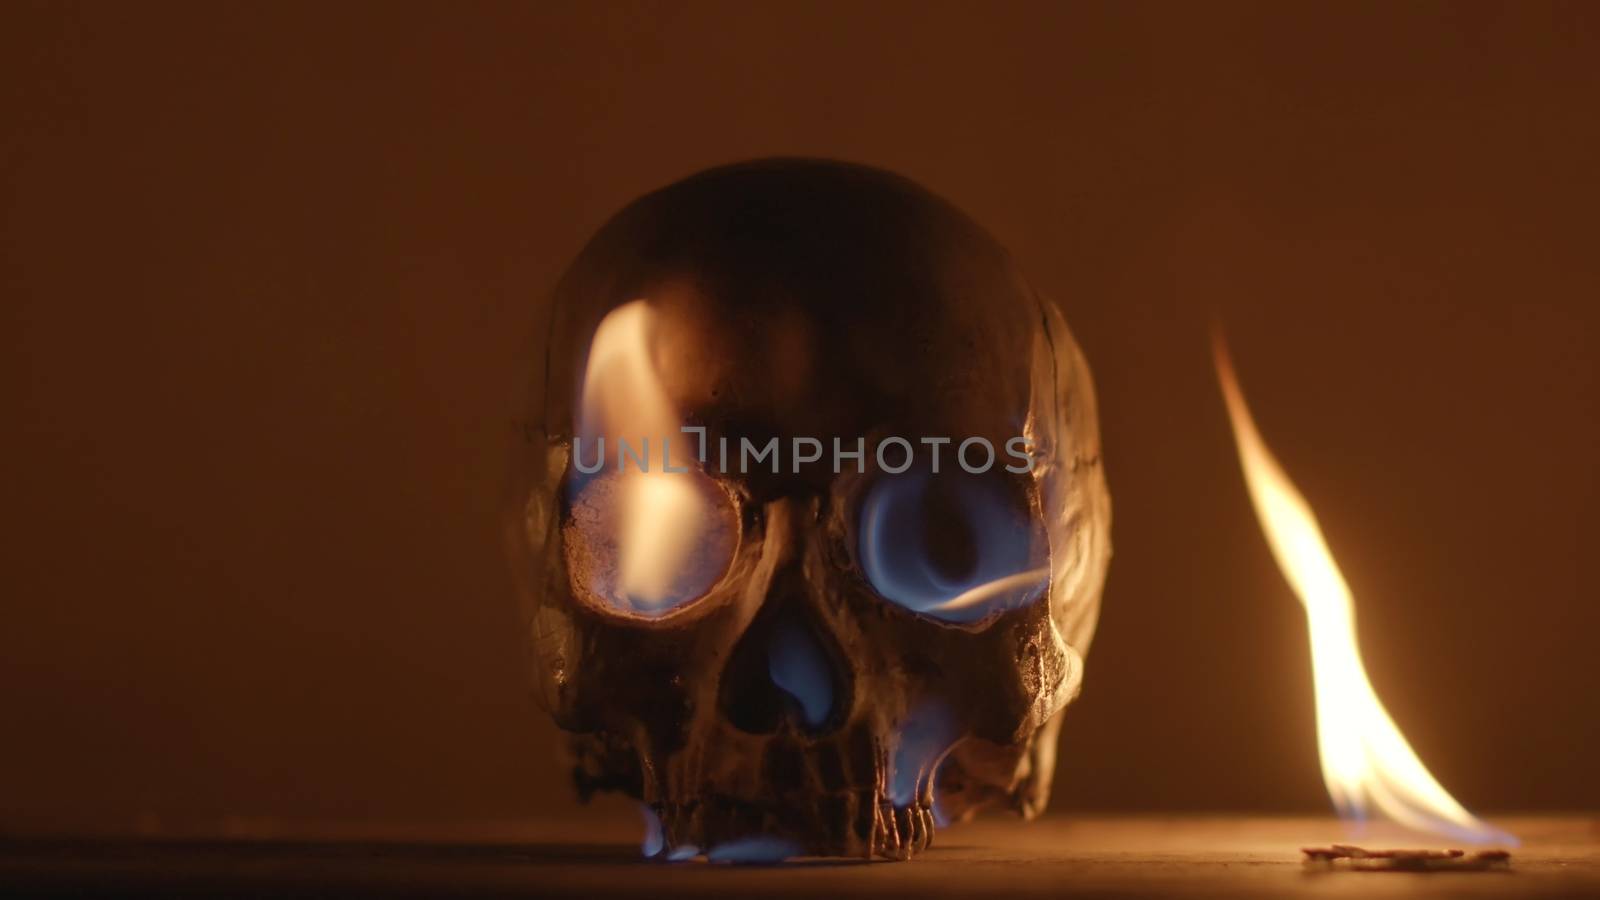 Burning human skull closeup photo by svedoliver